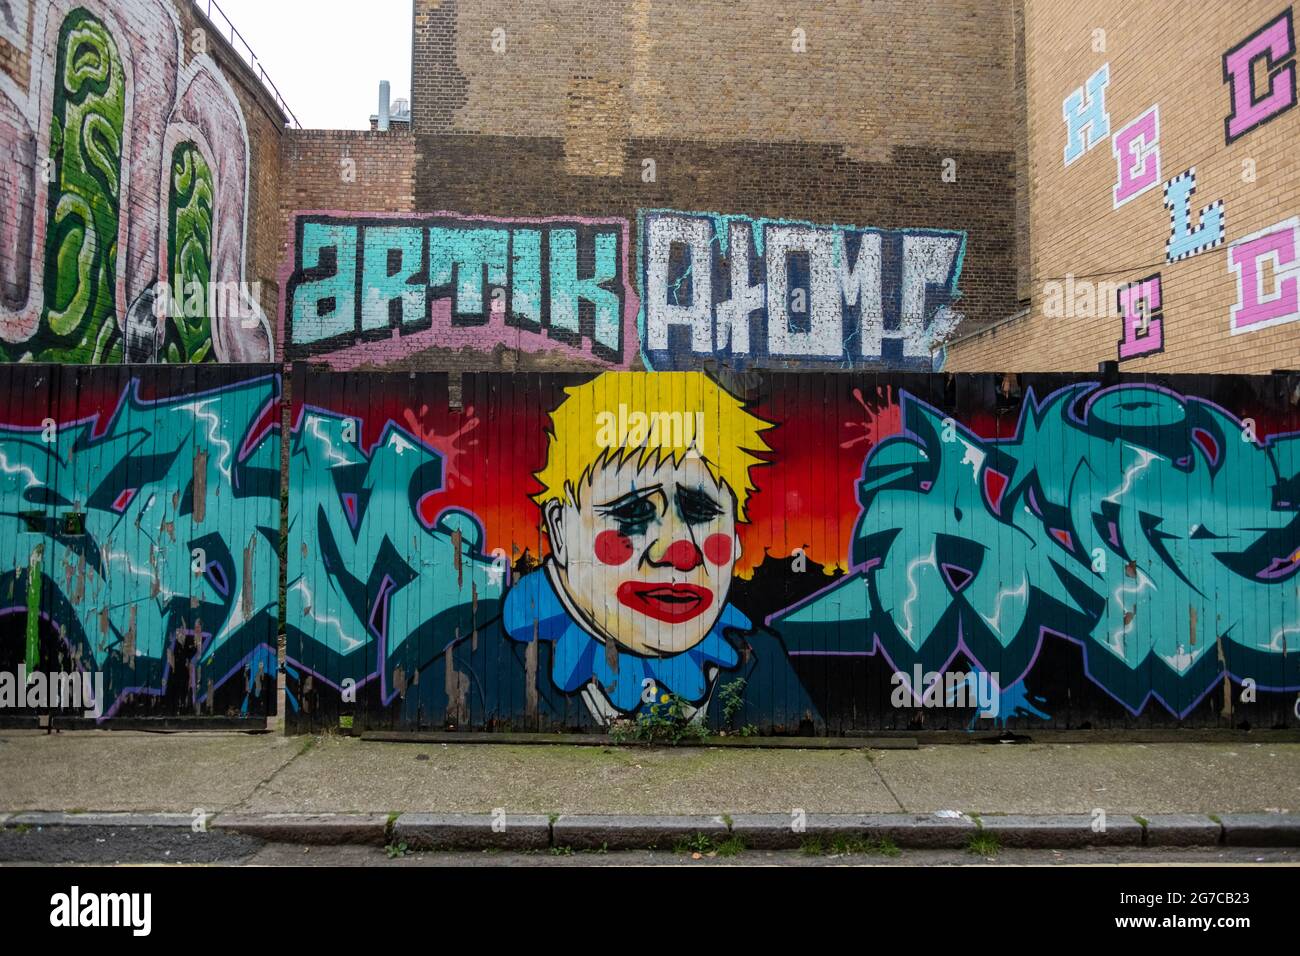 London- July, 2021: Graffiti art on wall in East London of Boris Johnson as a clown Stock Photo